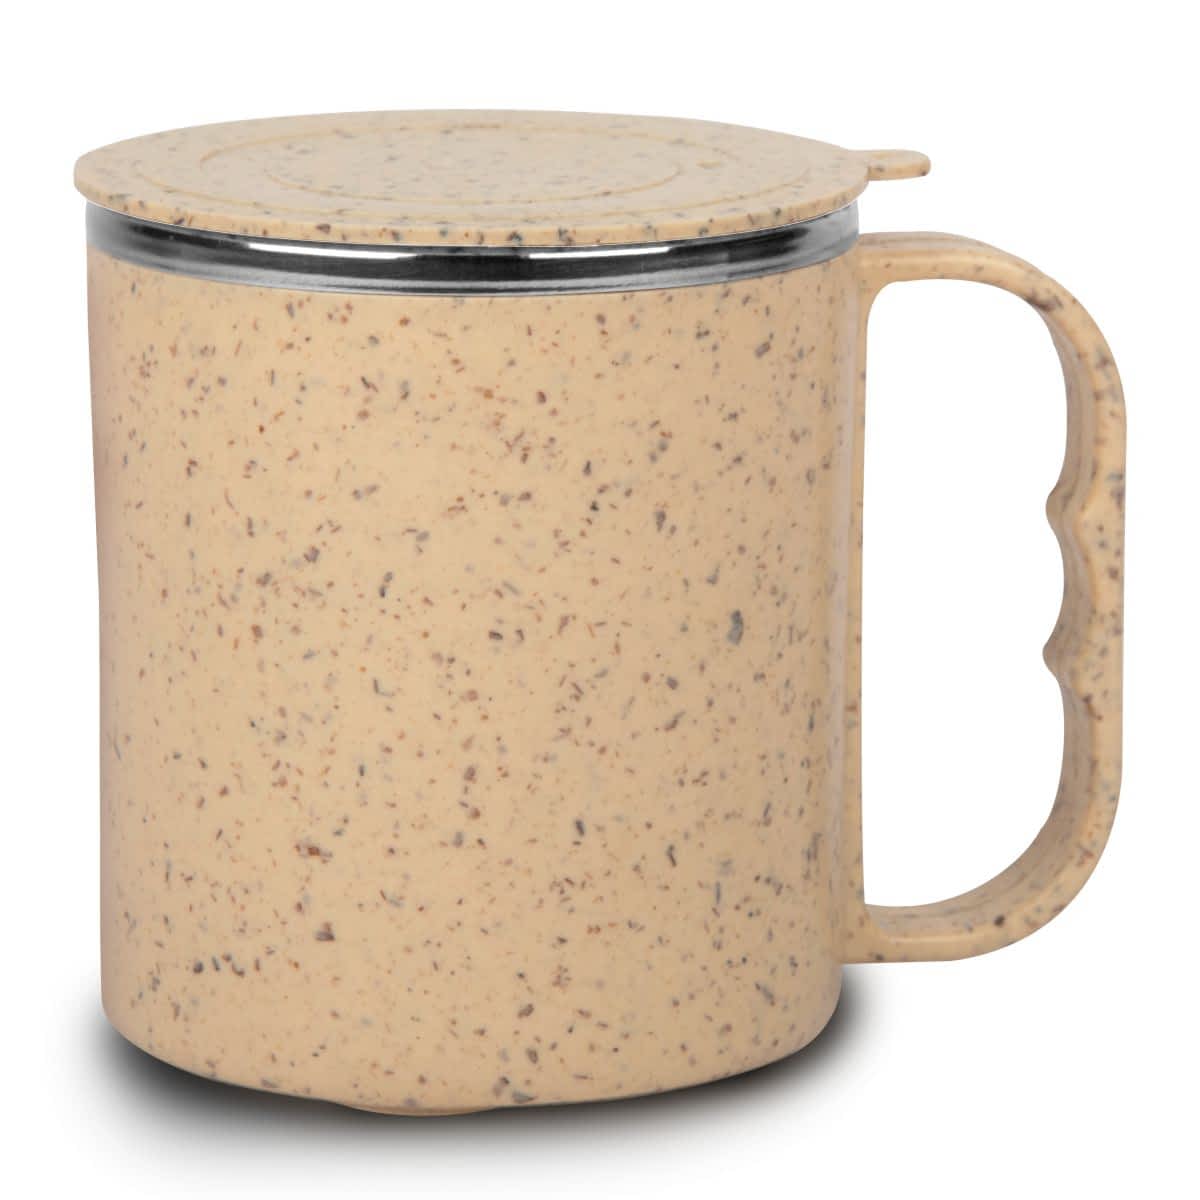 EcoMug: Eco Friendly Coffee mug with steel inside